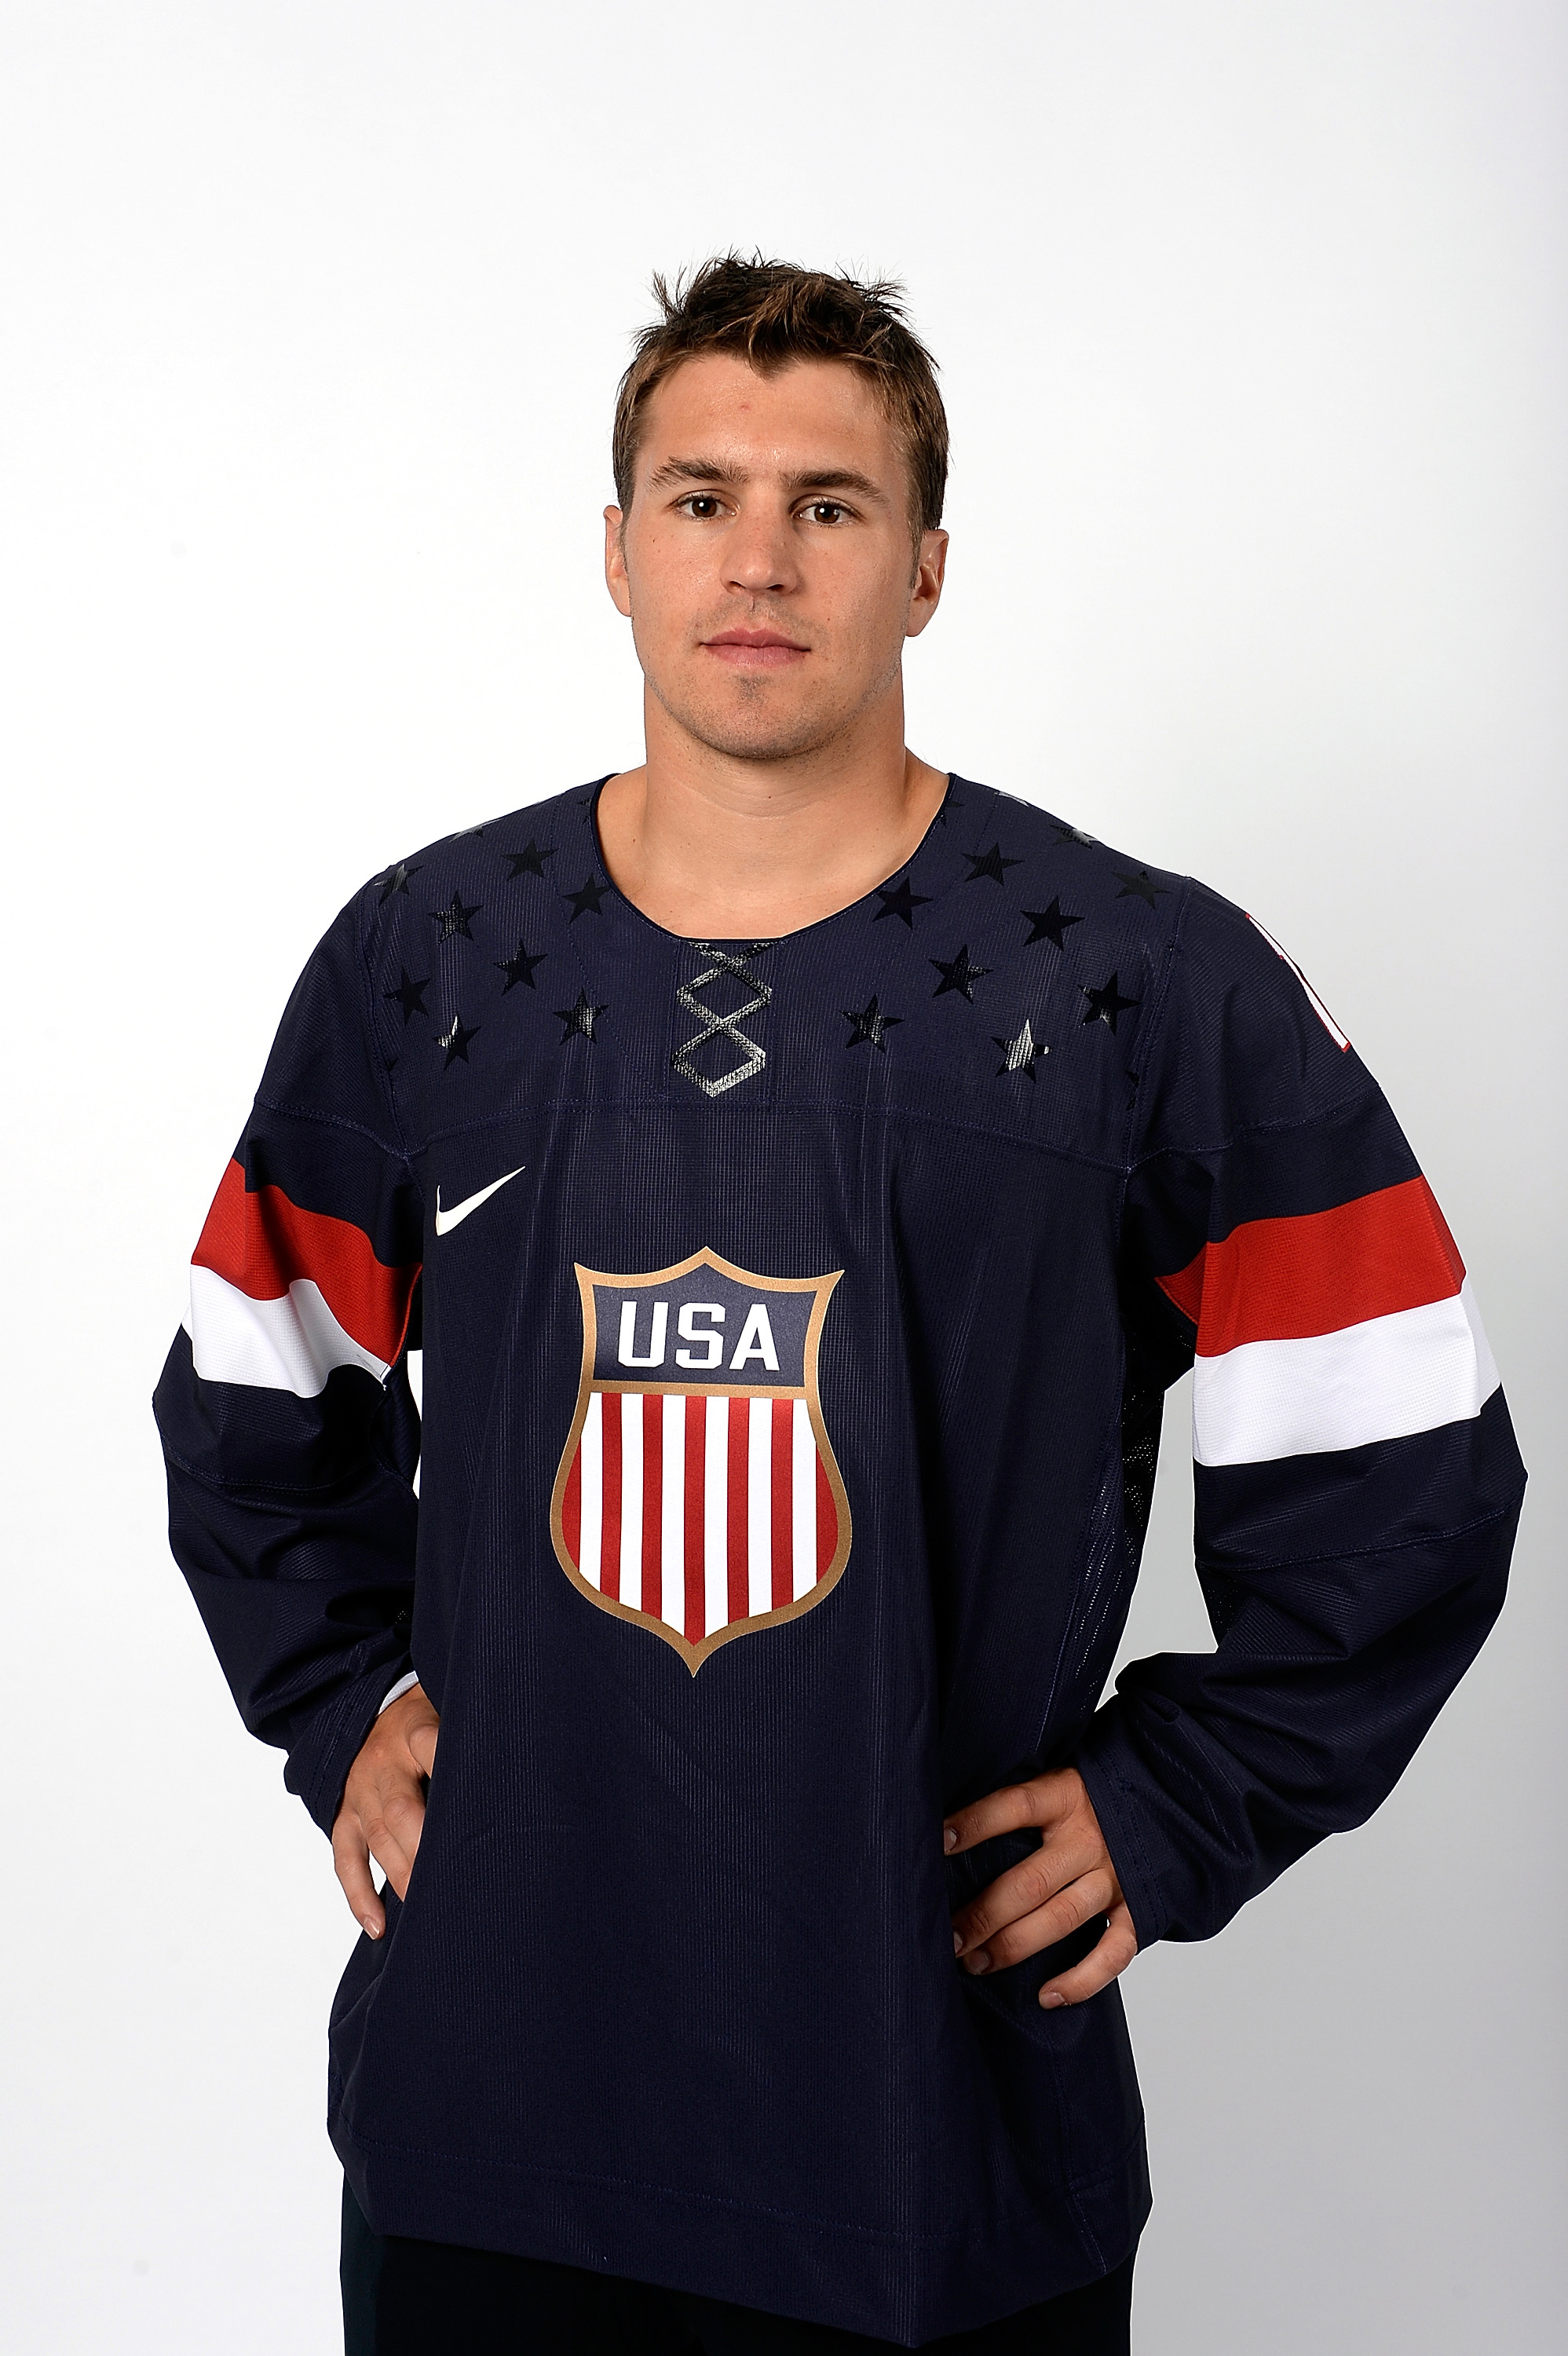 Winter Olympics 2014: Team USA names Zach Parise men's hockey captain 